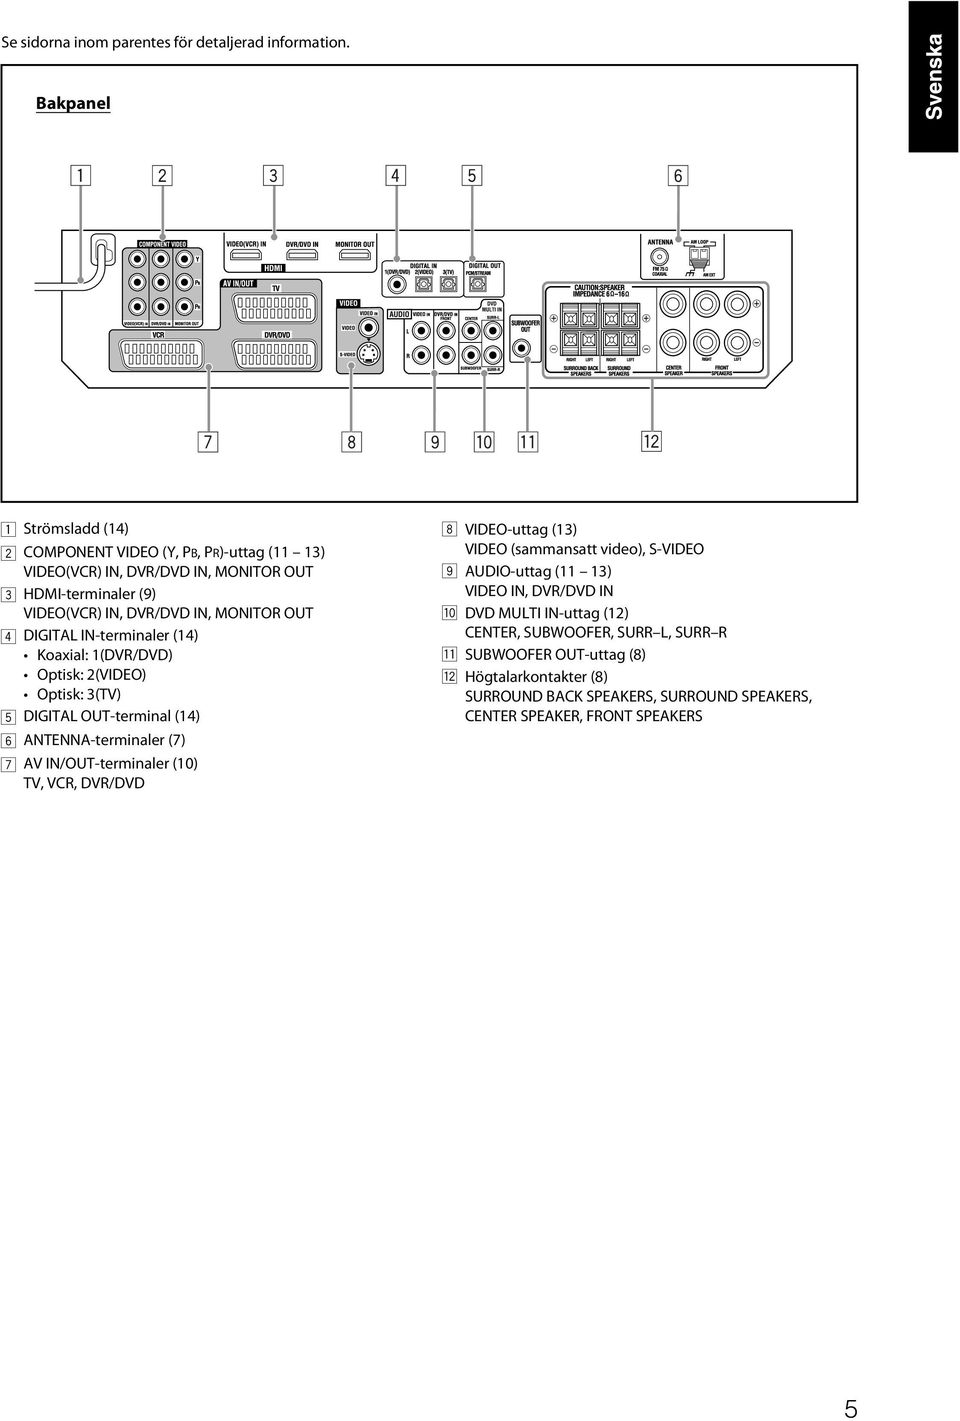 4 DIGITAL IN-terminaler (14) Koaxial: 1(DVR/DVD) Optisk: 2(VIDEO) Optisk: 3(TV) 5 DIGITAL OUT-terminal (14) 6 ANTENNA-terminaler (7) 7 AV IN/OUT-terminaler (10) TV, VCR,